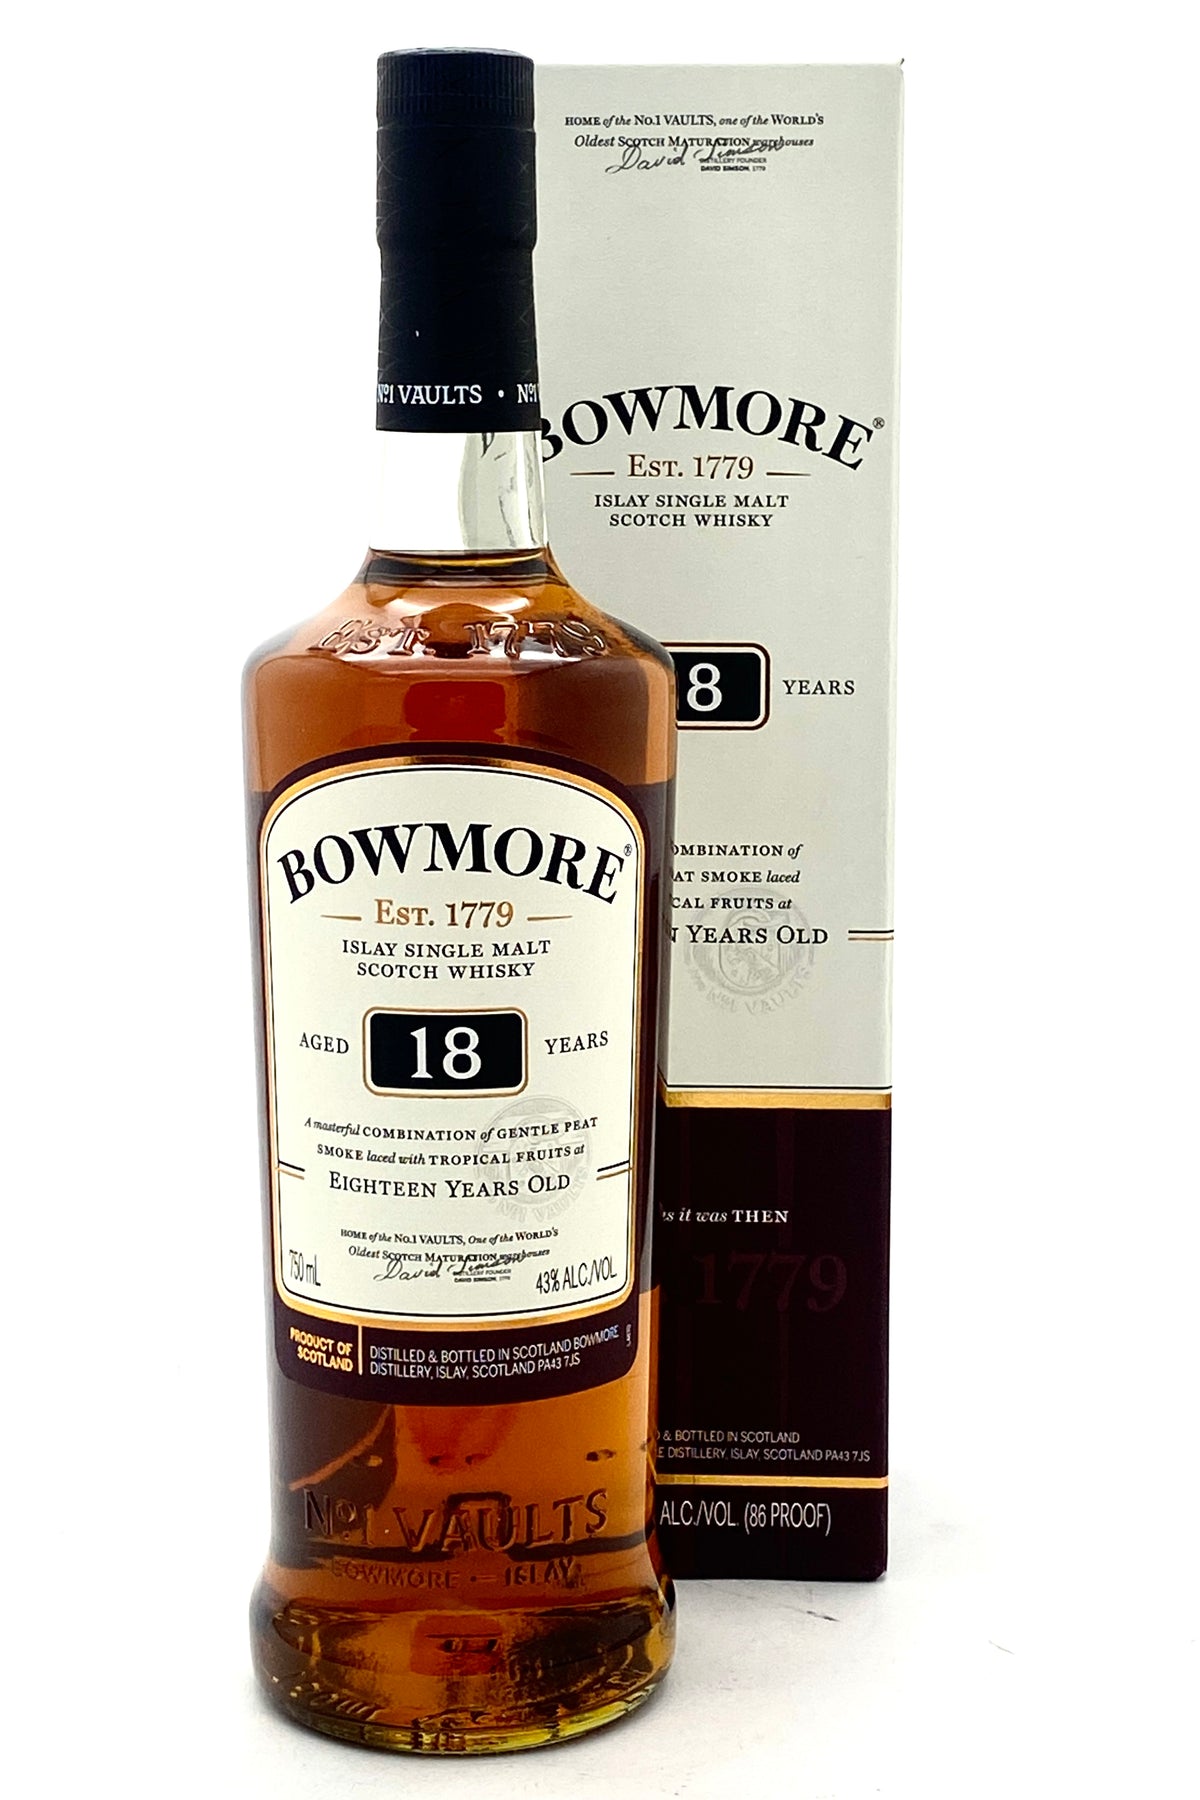 Bowmore 18 Year old Islay Single Malt Scotch Whisky